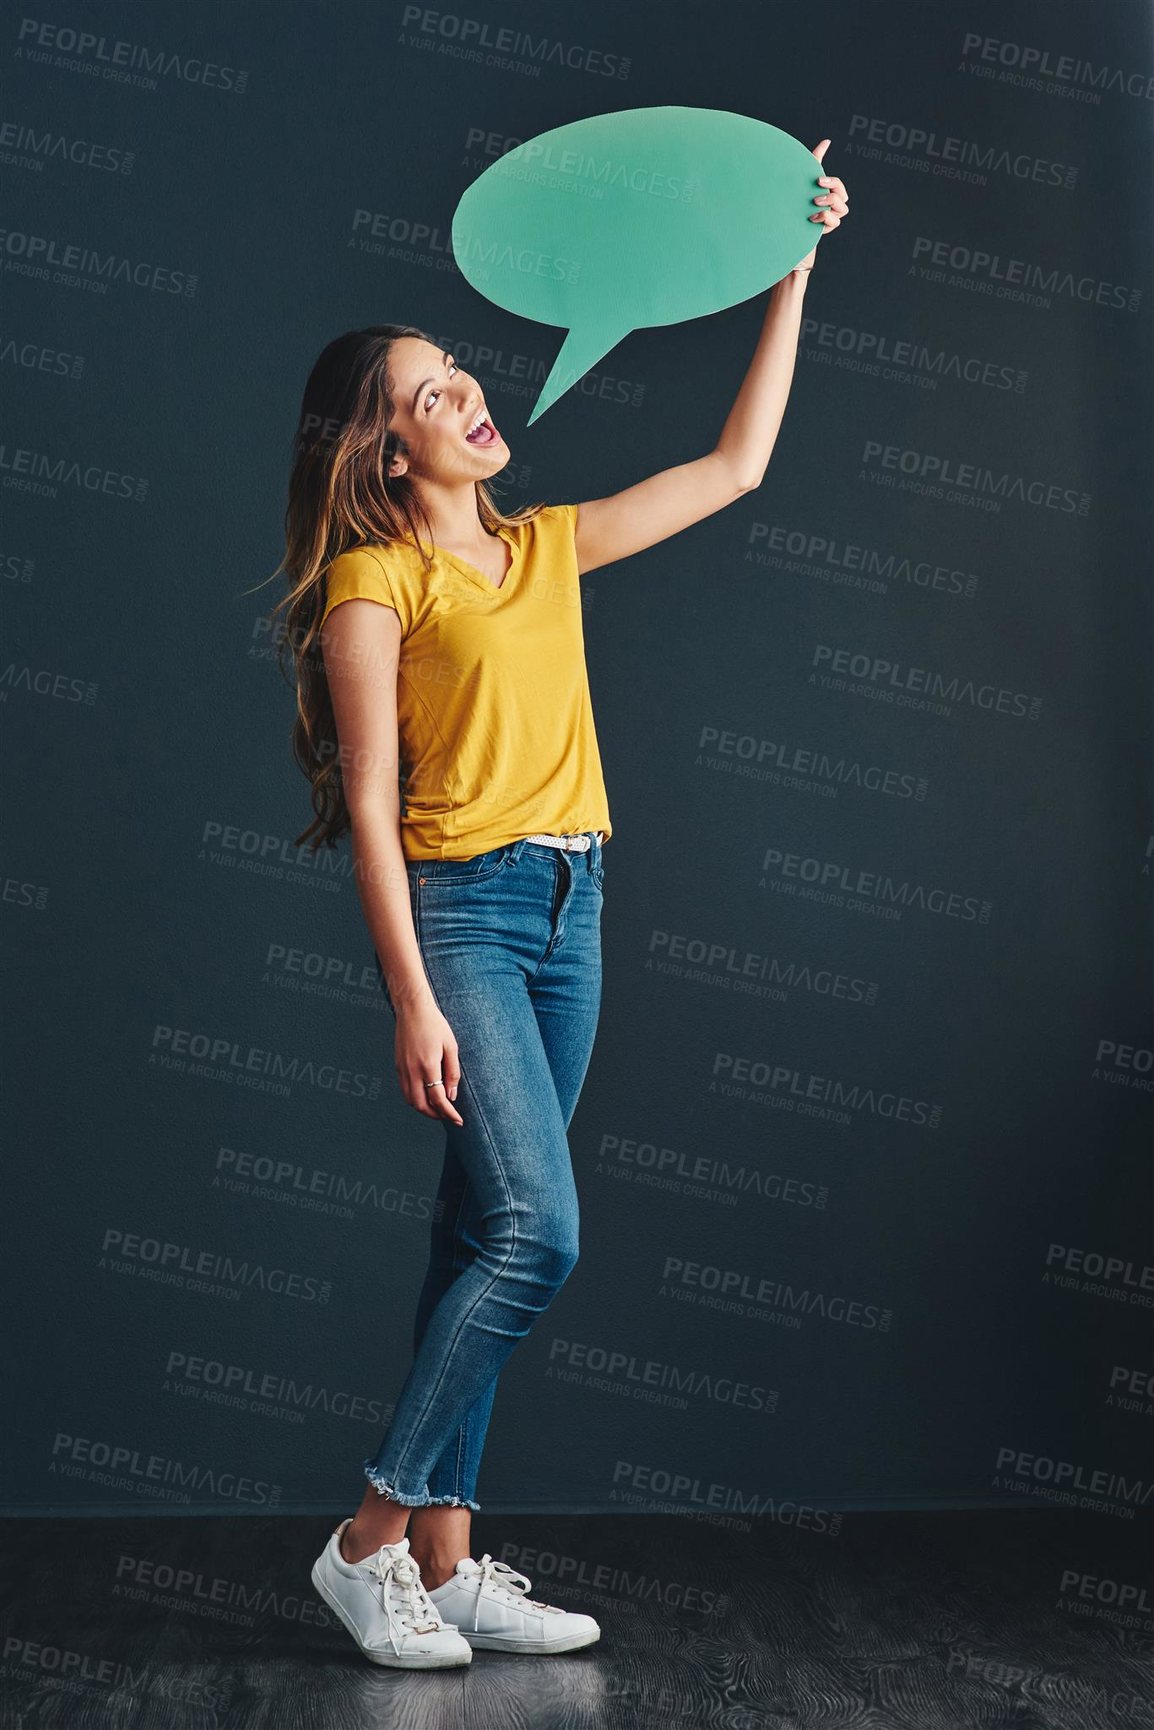 Buy stock photo Studio shot of a beautiful young woman holding a speech bubble